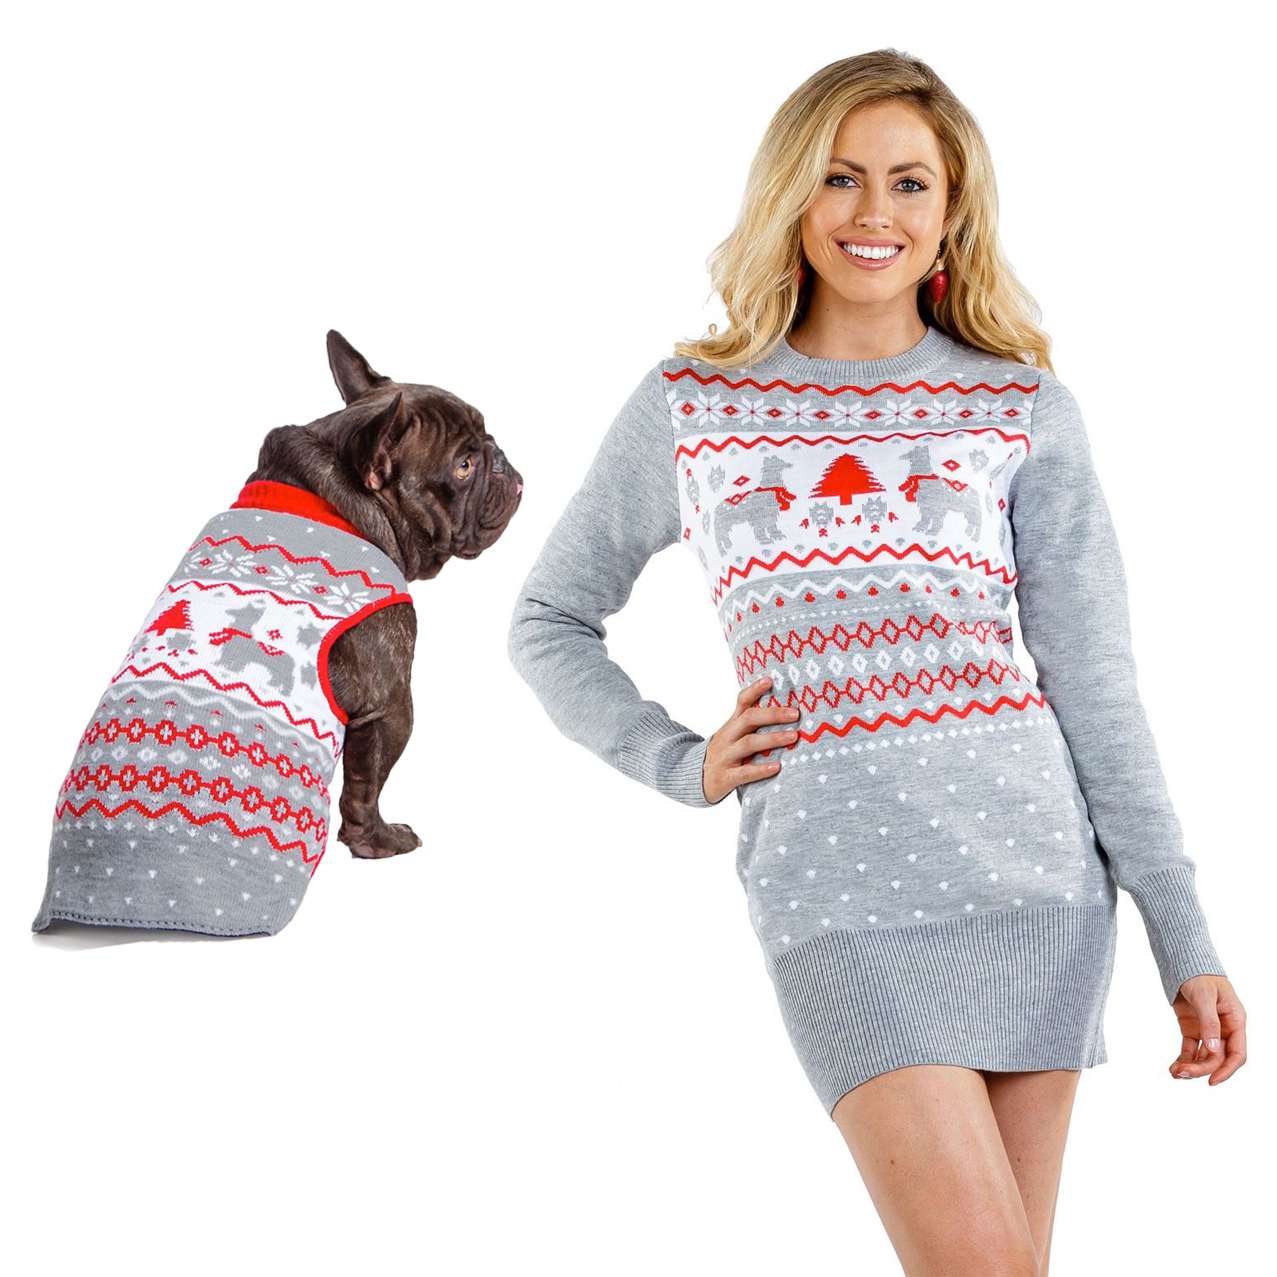 tipsy-llama-matching-sweaters